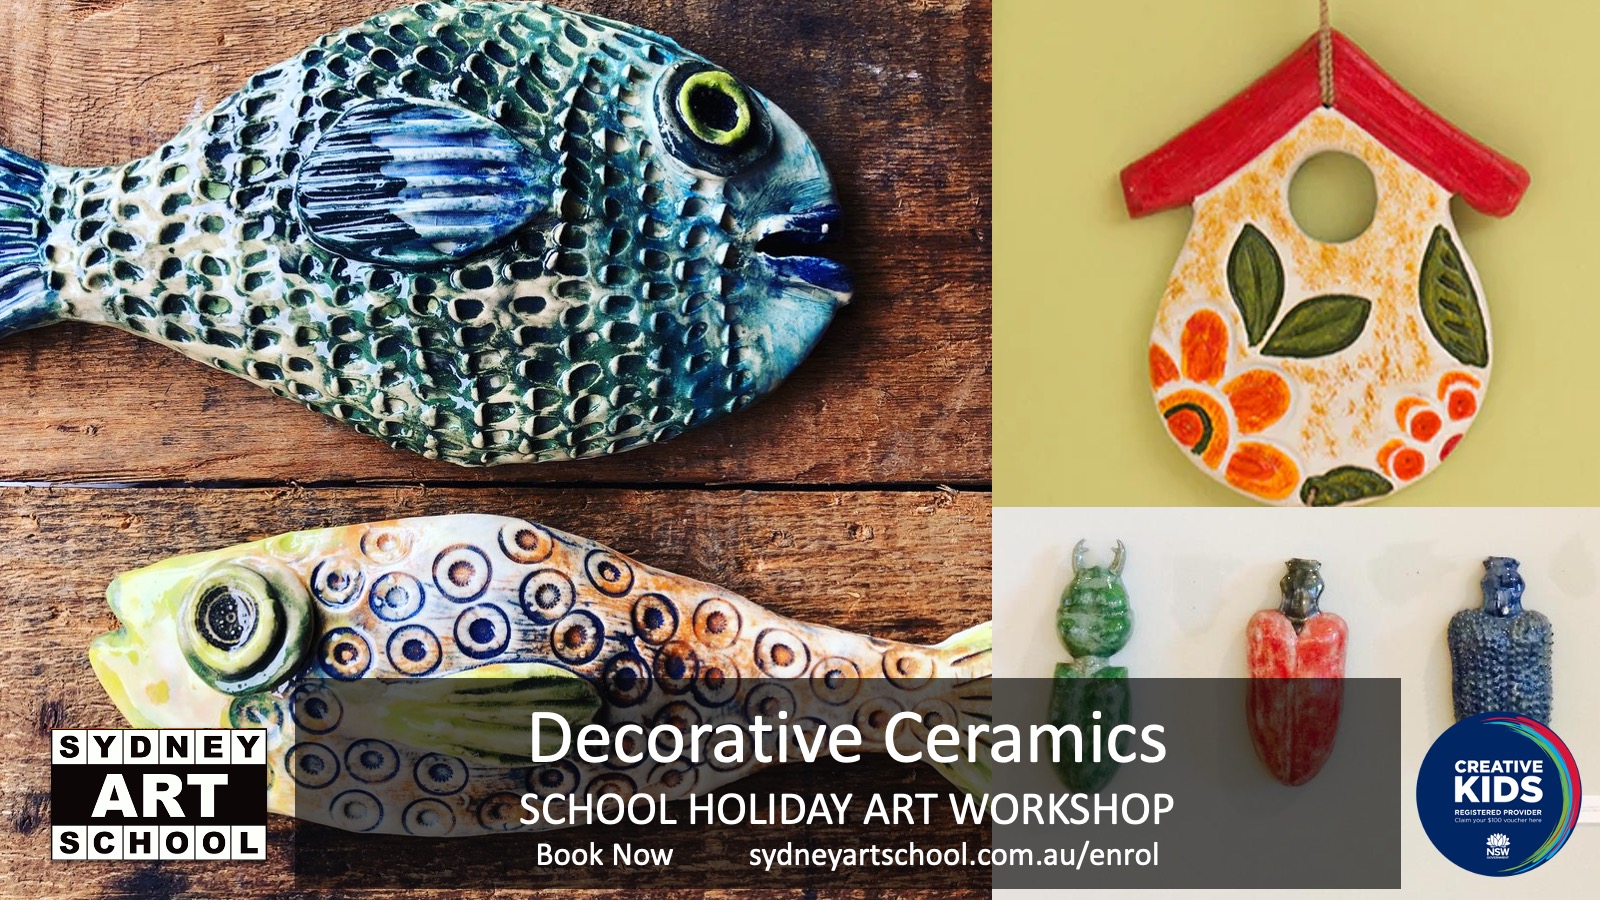 Sydney Art School Holiday Art Workshop Decorative_Ceramics